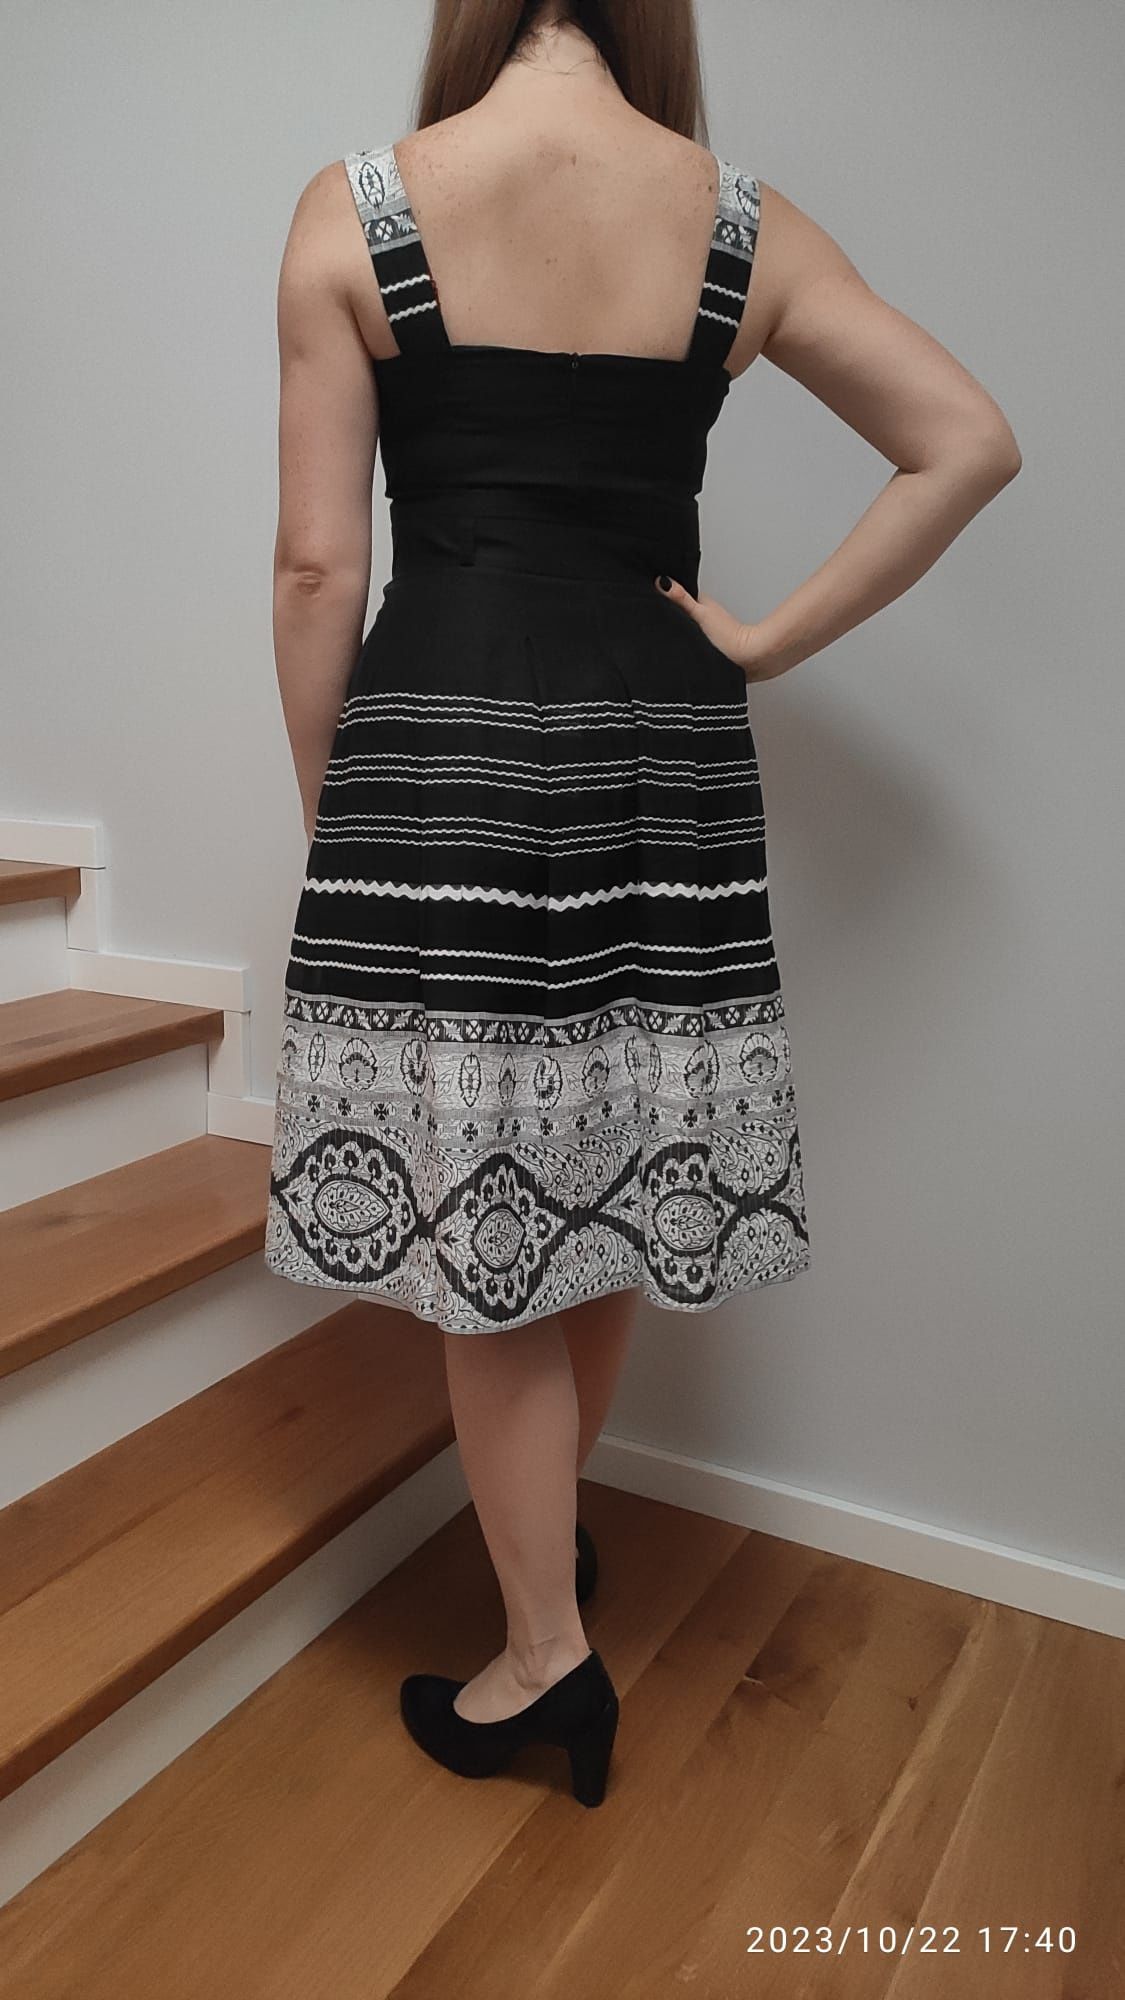 Sukienka GaPa Fashion elegancka, haftowana, rozkloszowana r. 36